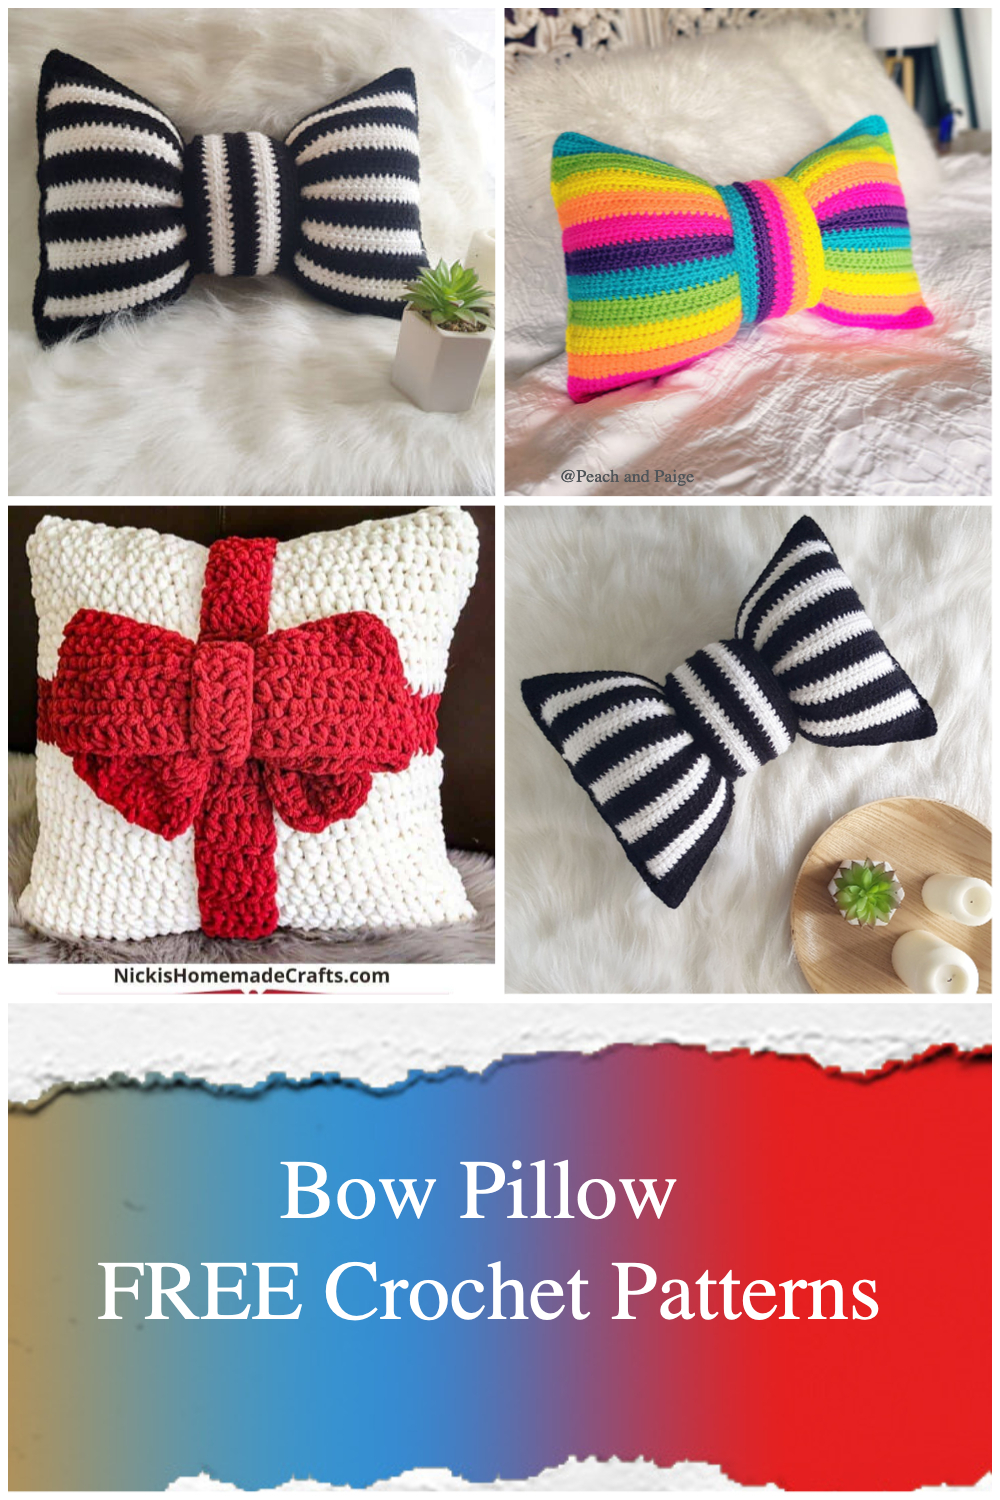  Bow Pillow FREE Crochet Patterns